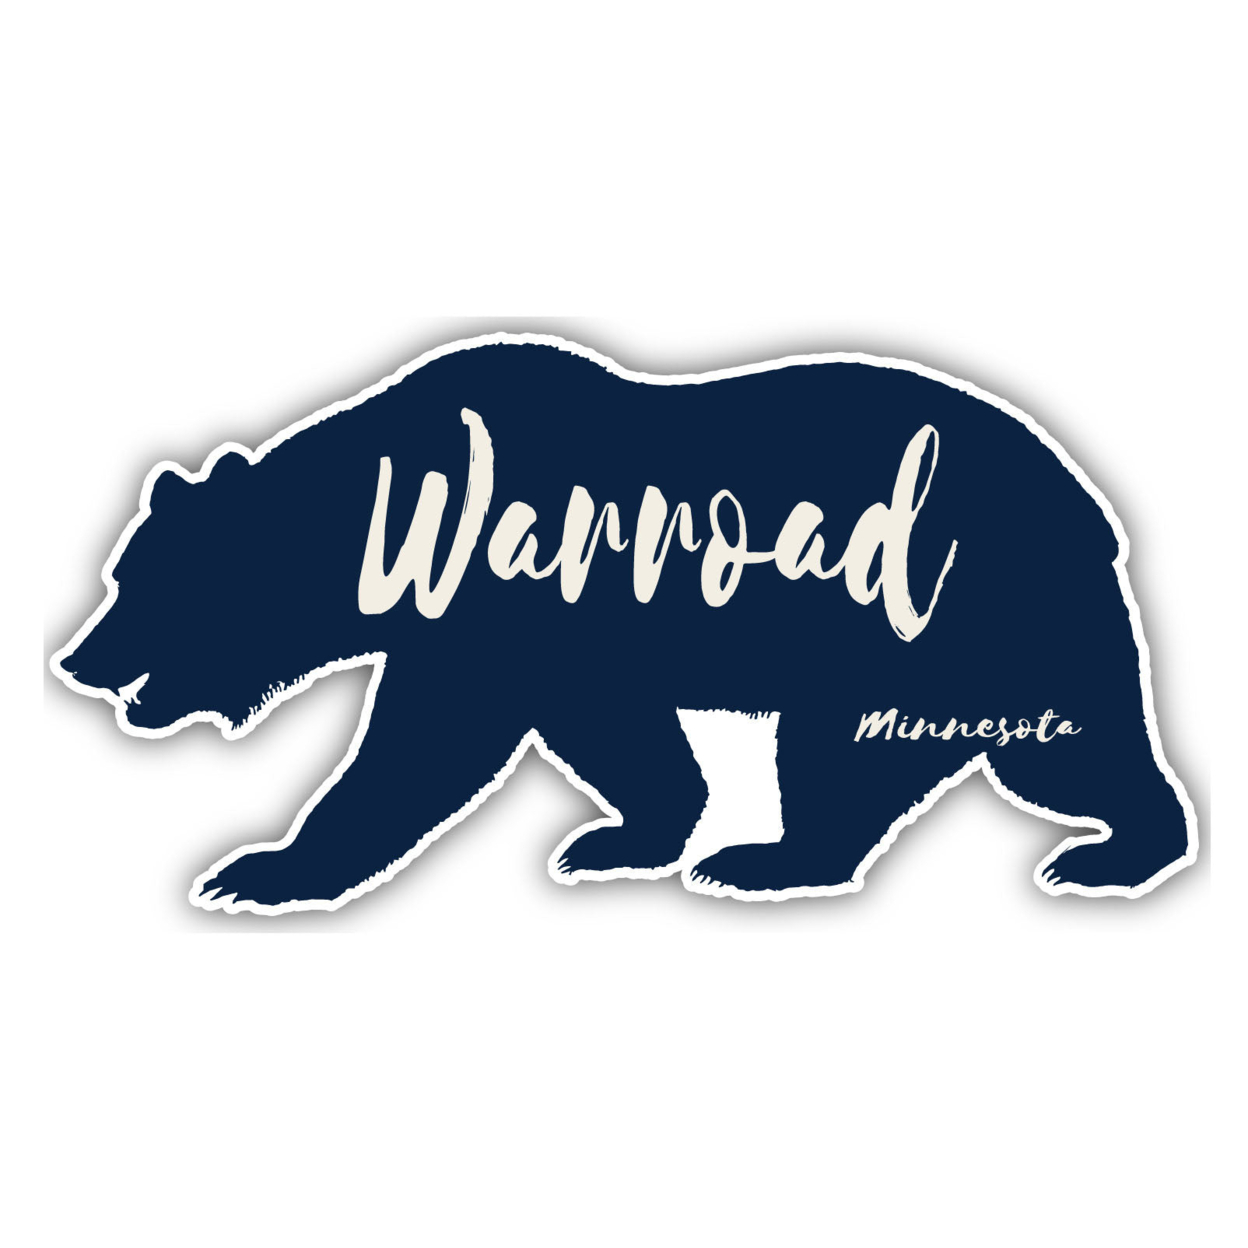 Warroad Minnesota Souvenir Decorative Stickers (Choose Theme And Size) - Single Unit, 4-Inch, Bear